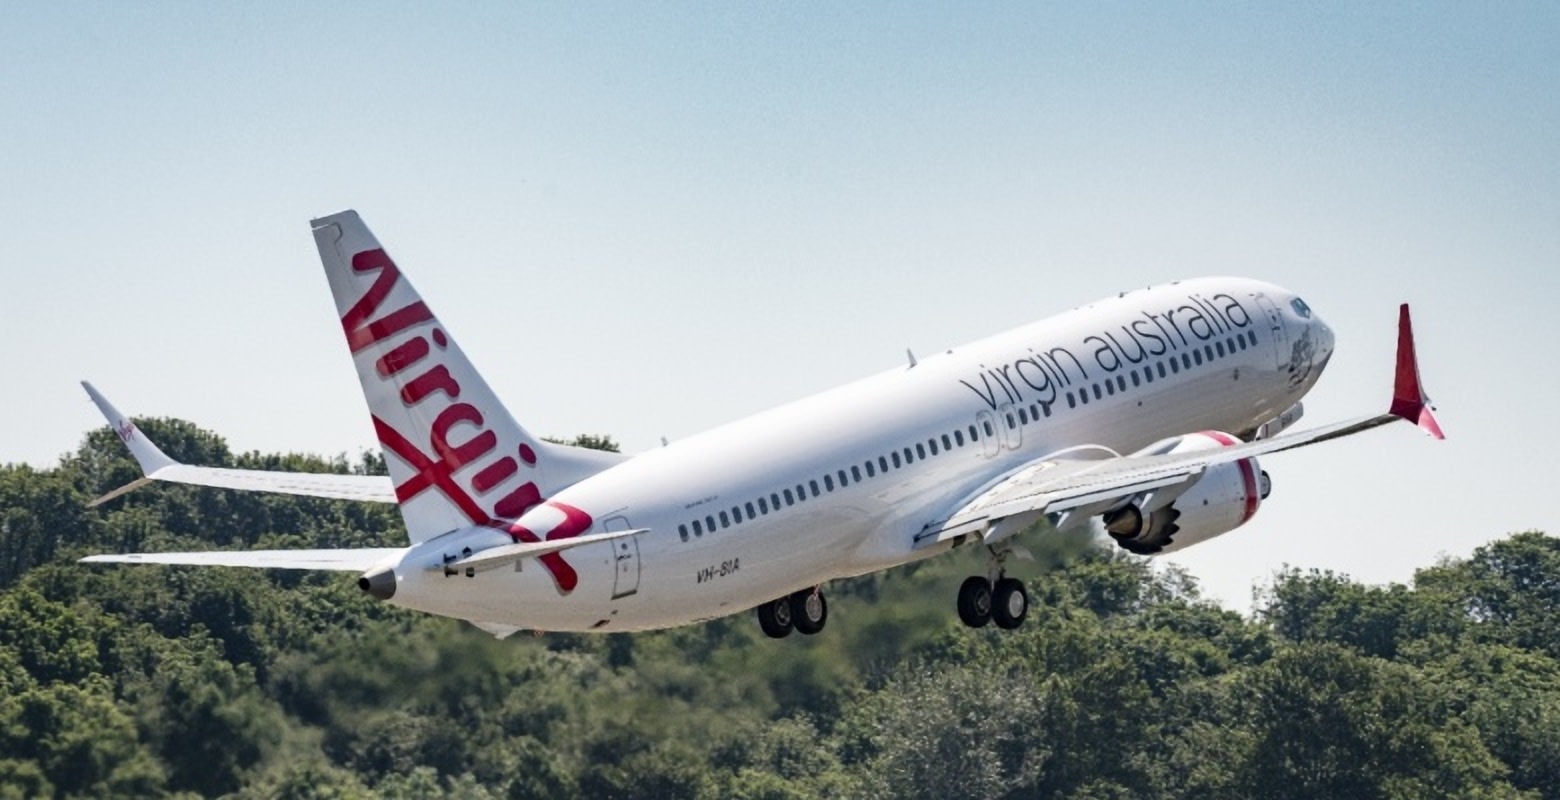 Virgin Australia and Boeing Unite for Sustainability